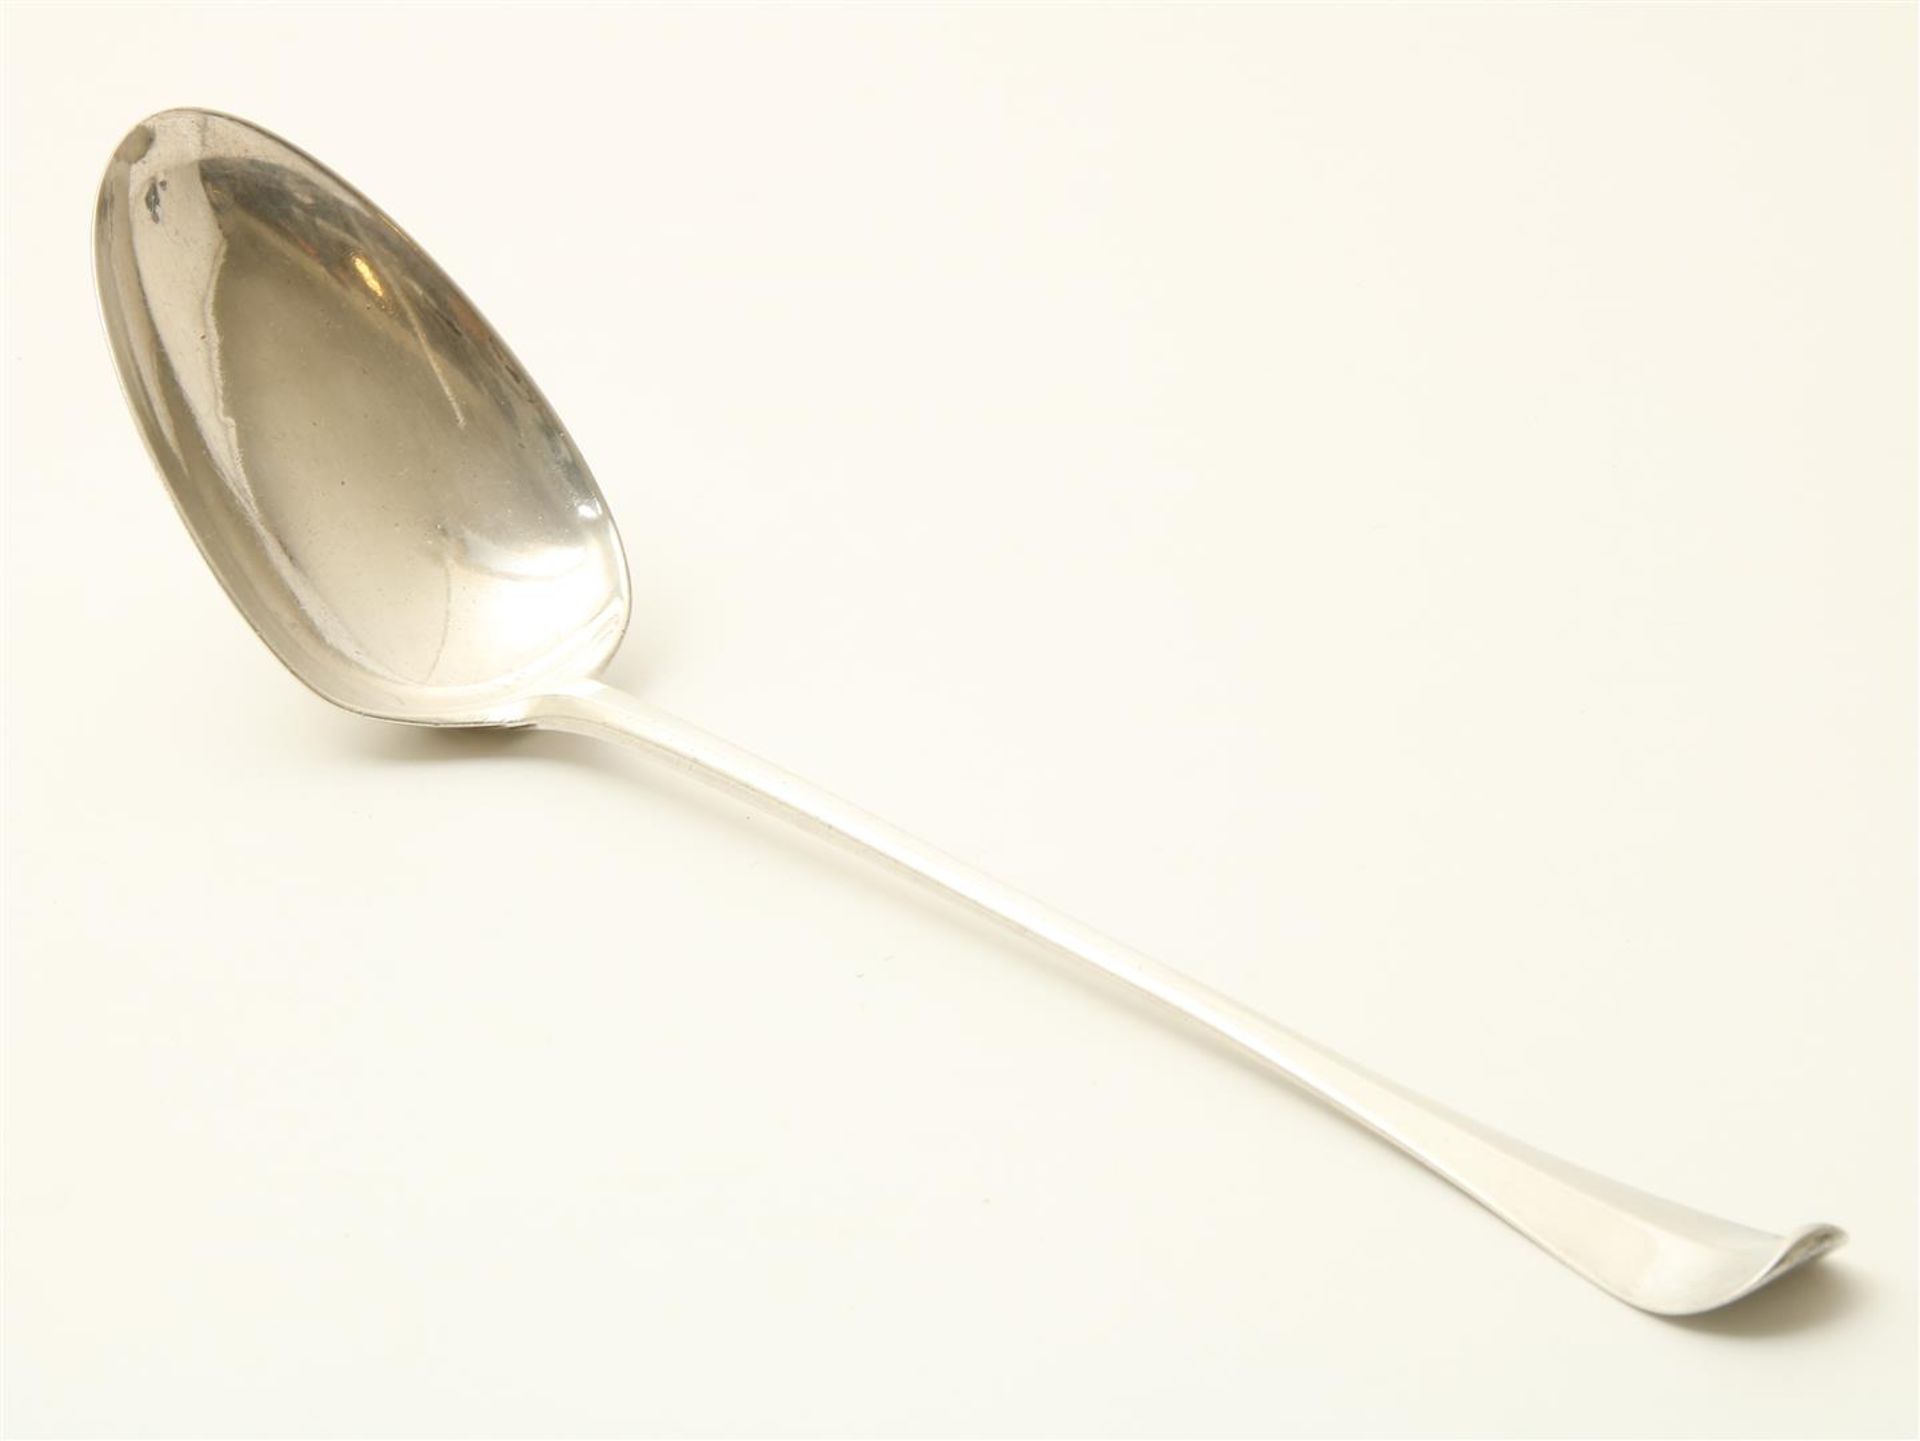 Silver mush spoon, Jacob Schenk, 1745